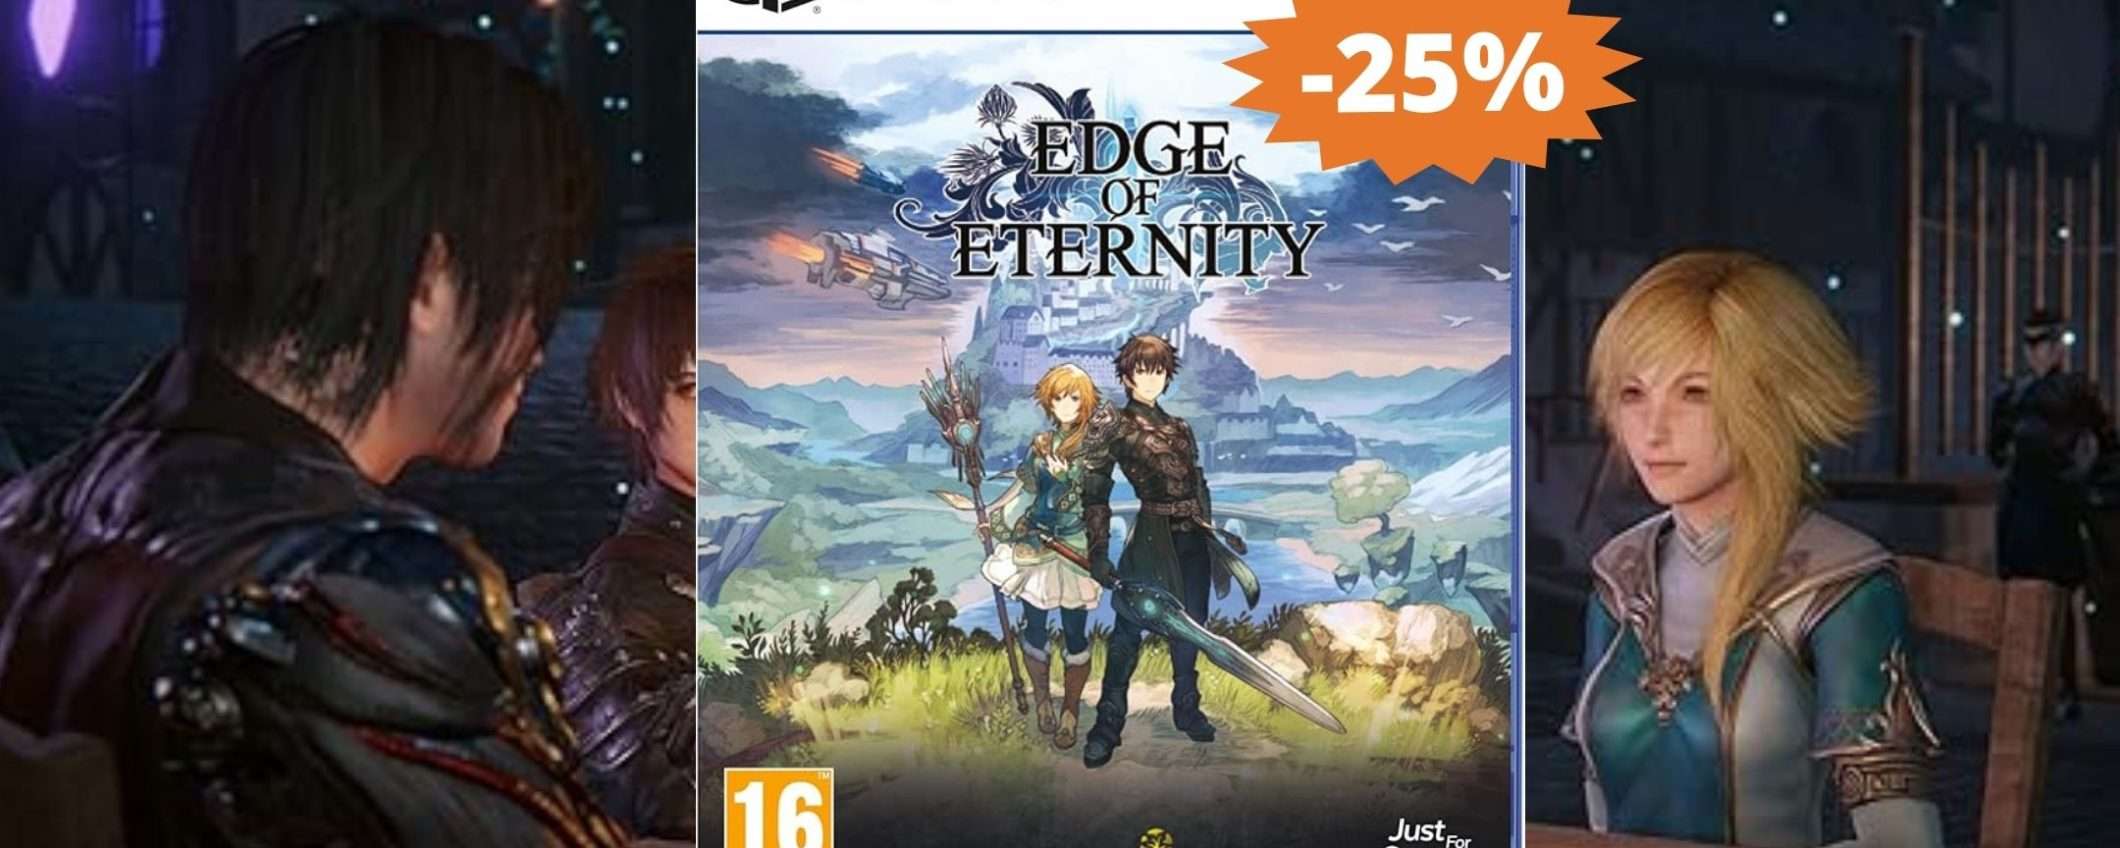 Edge of Eternity per PS5: un'avventura IMPERDIBILE (-25%)